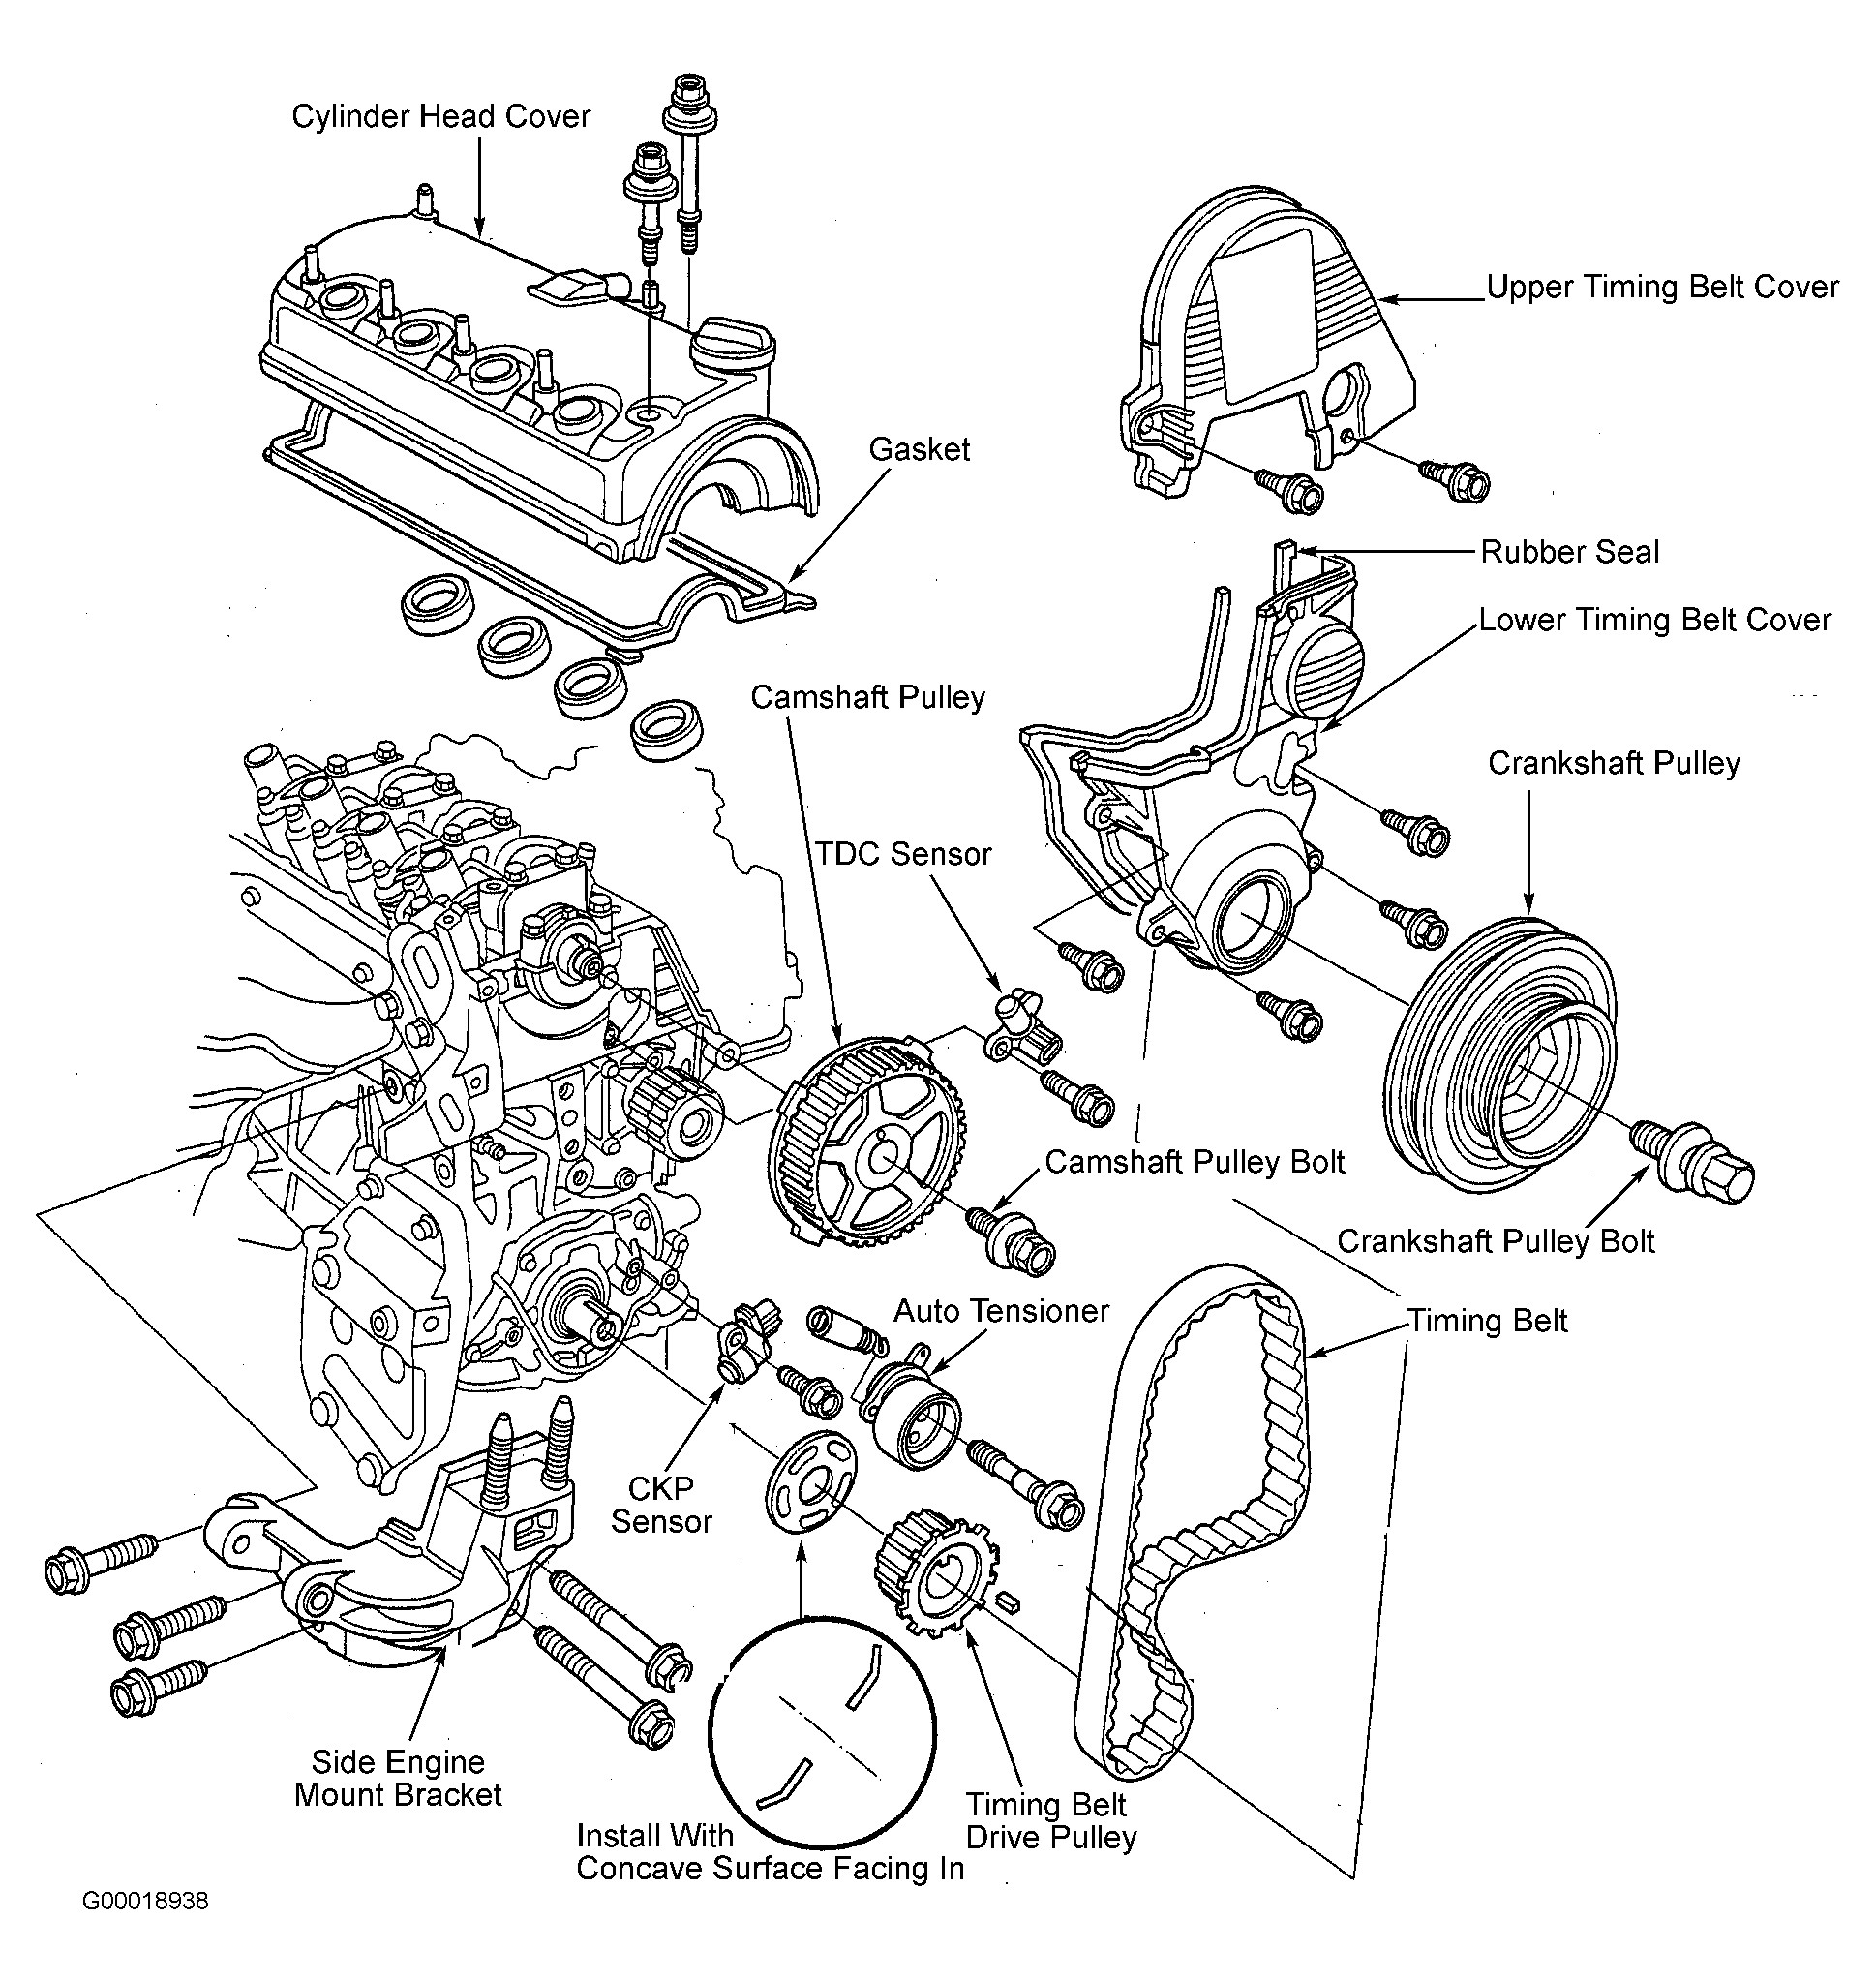 Engine Part Diagram Honda Civic Parts Diagram Wonderful Likeness Serpentine and Timing